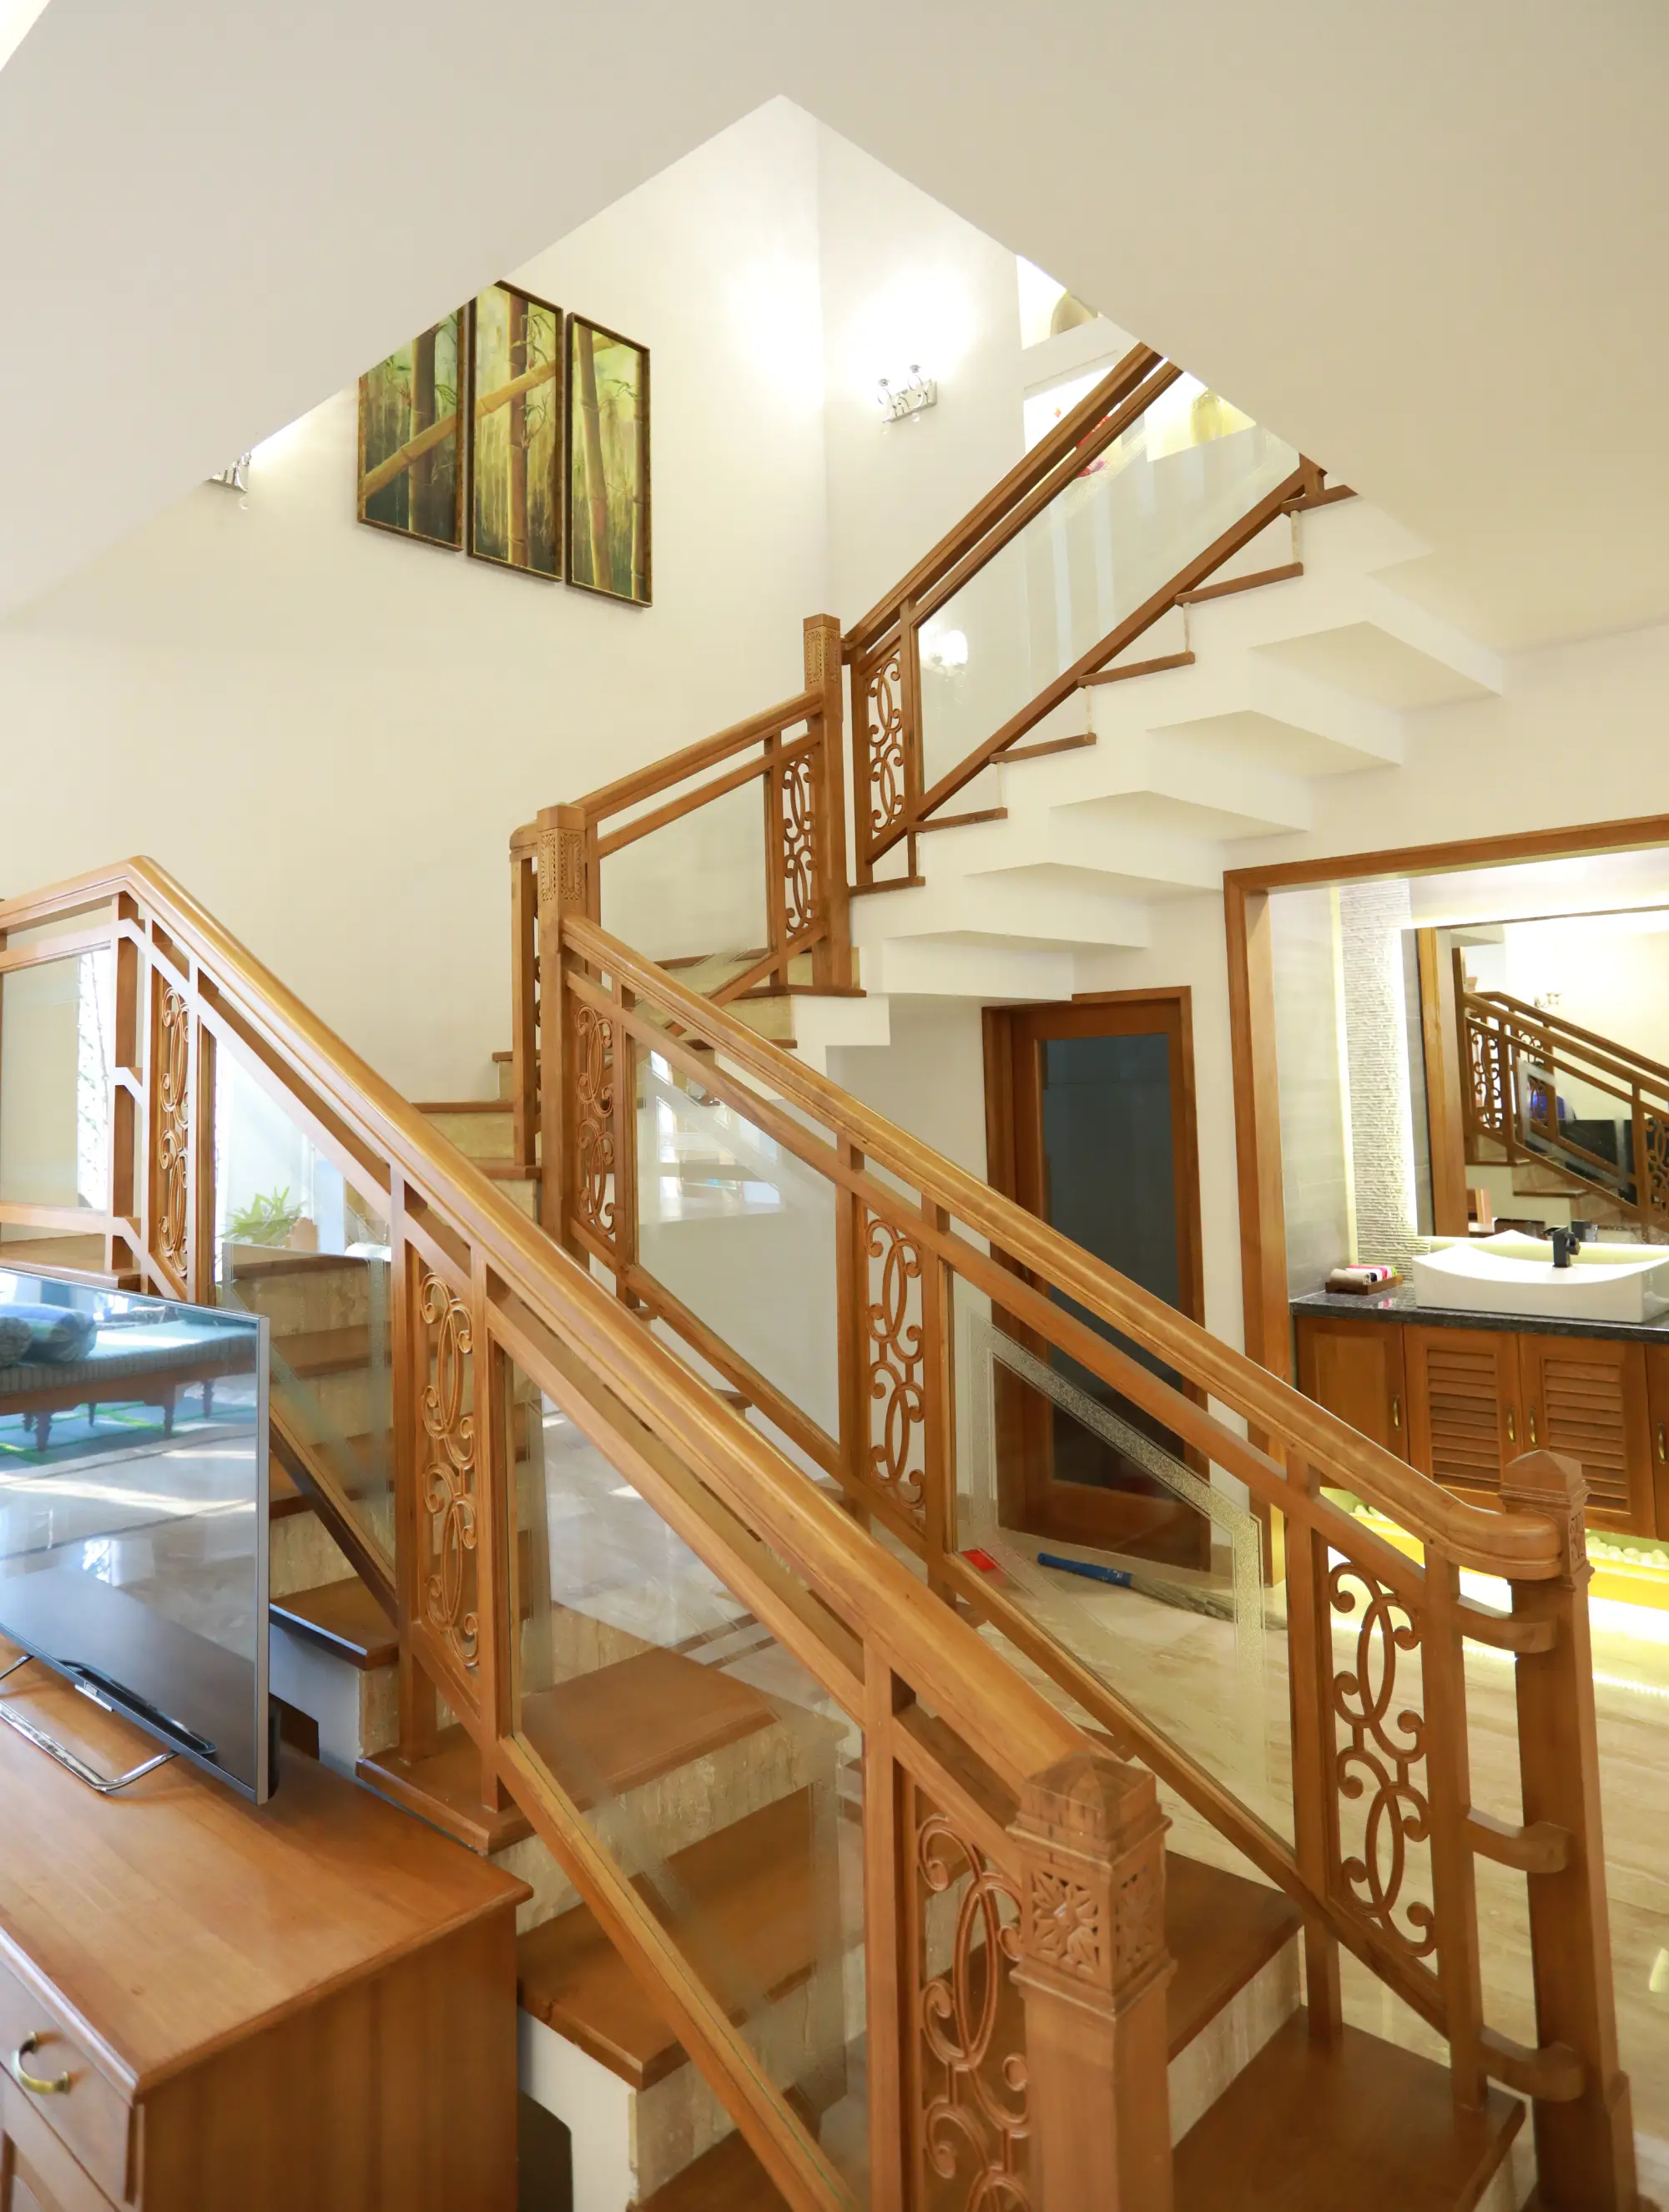 wooden stairway with exquisite craftsmanship